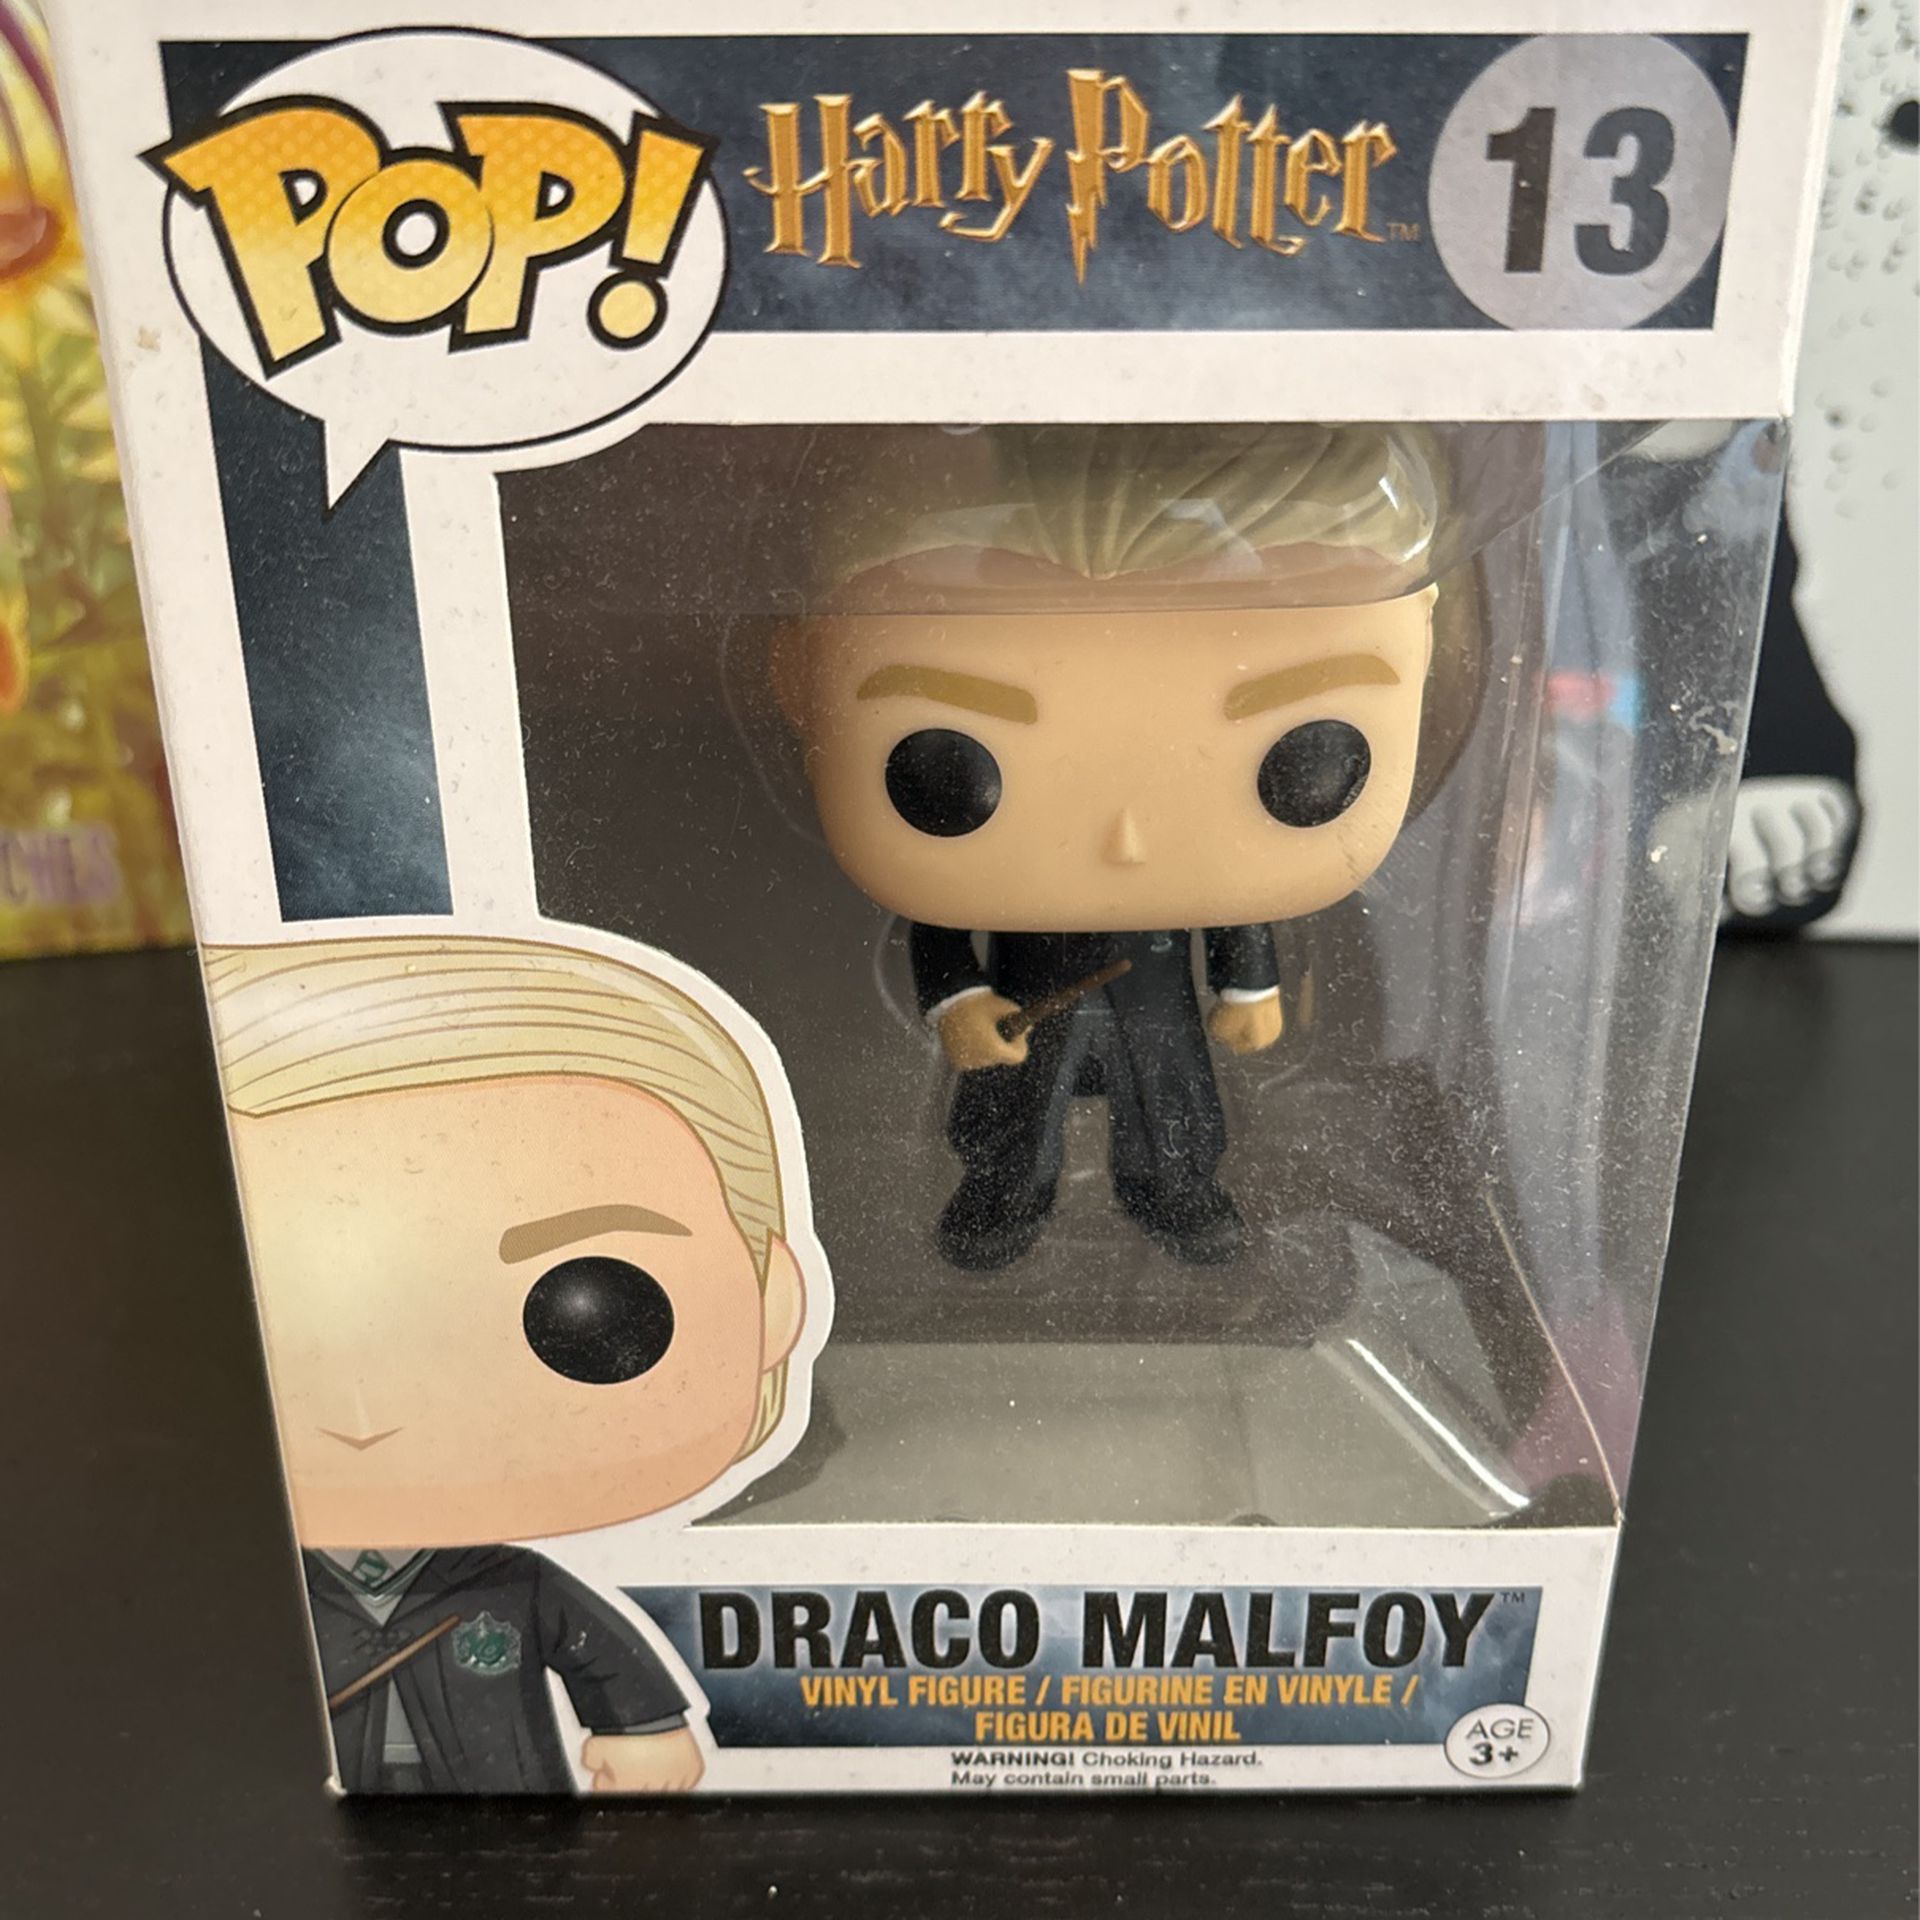 Harry Potter POP Draco Malfoy Vinyl Figure